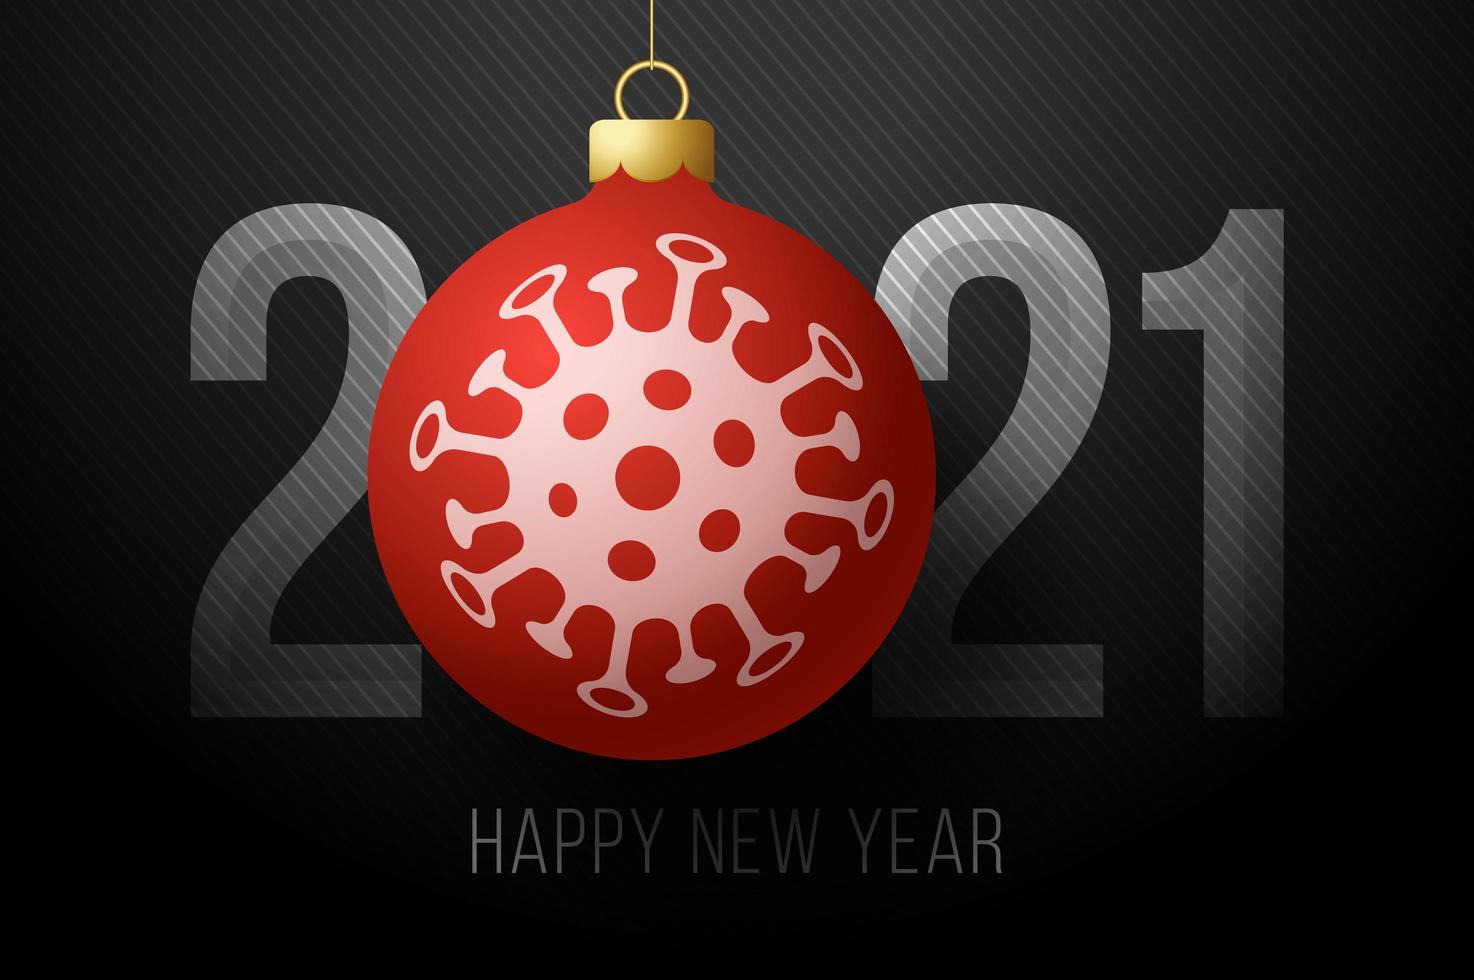 Happy New Year 2021 typography with Coronavirus ball ornament vector